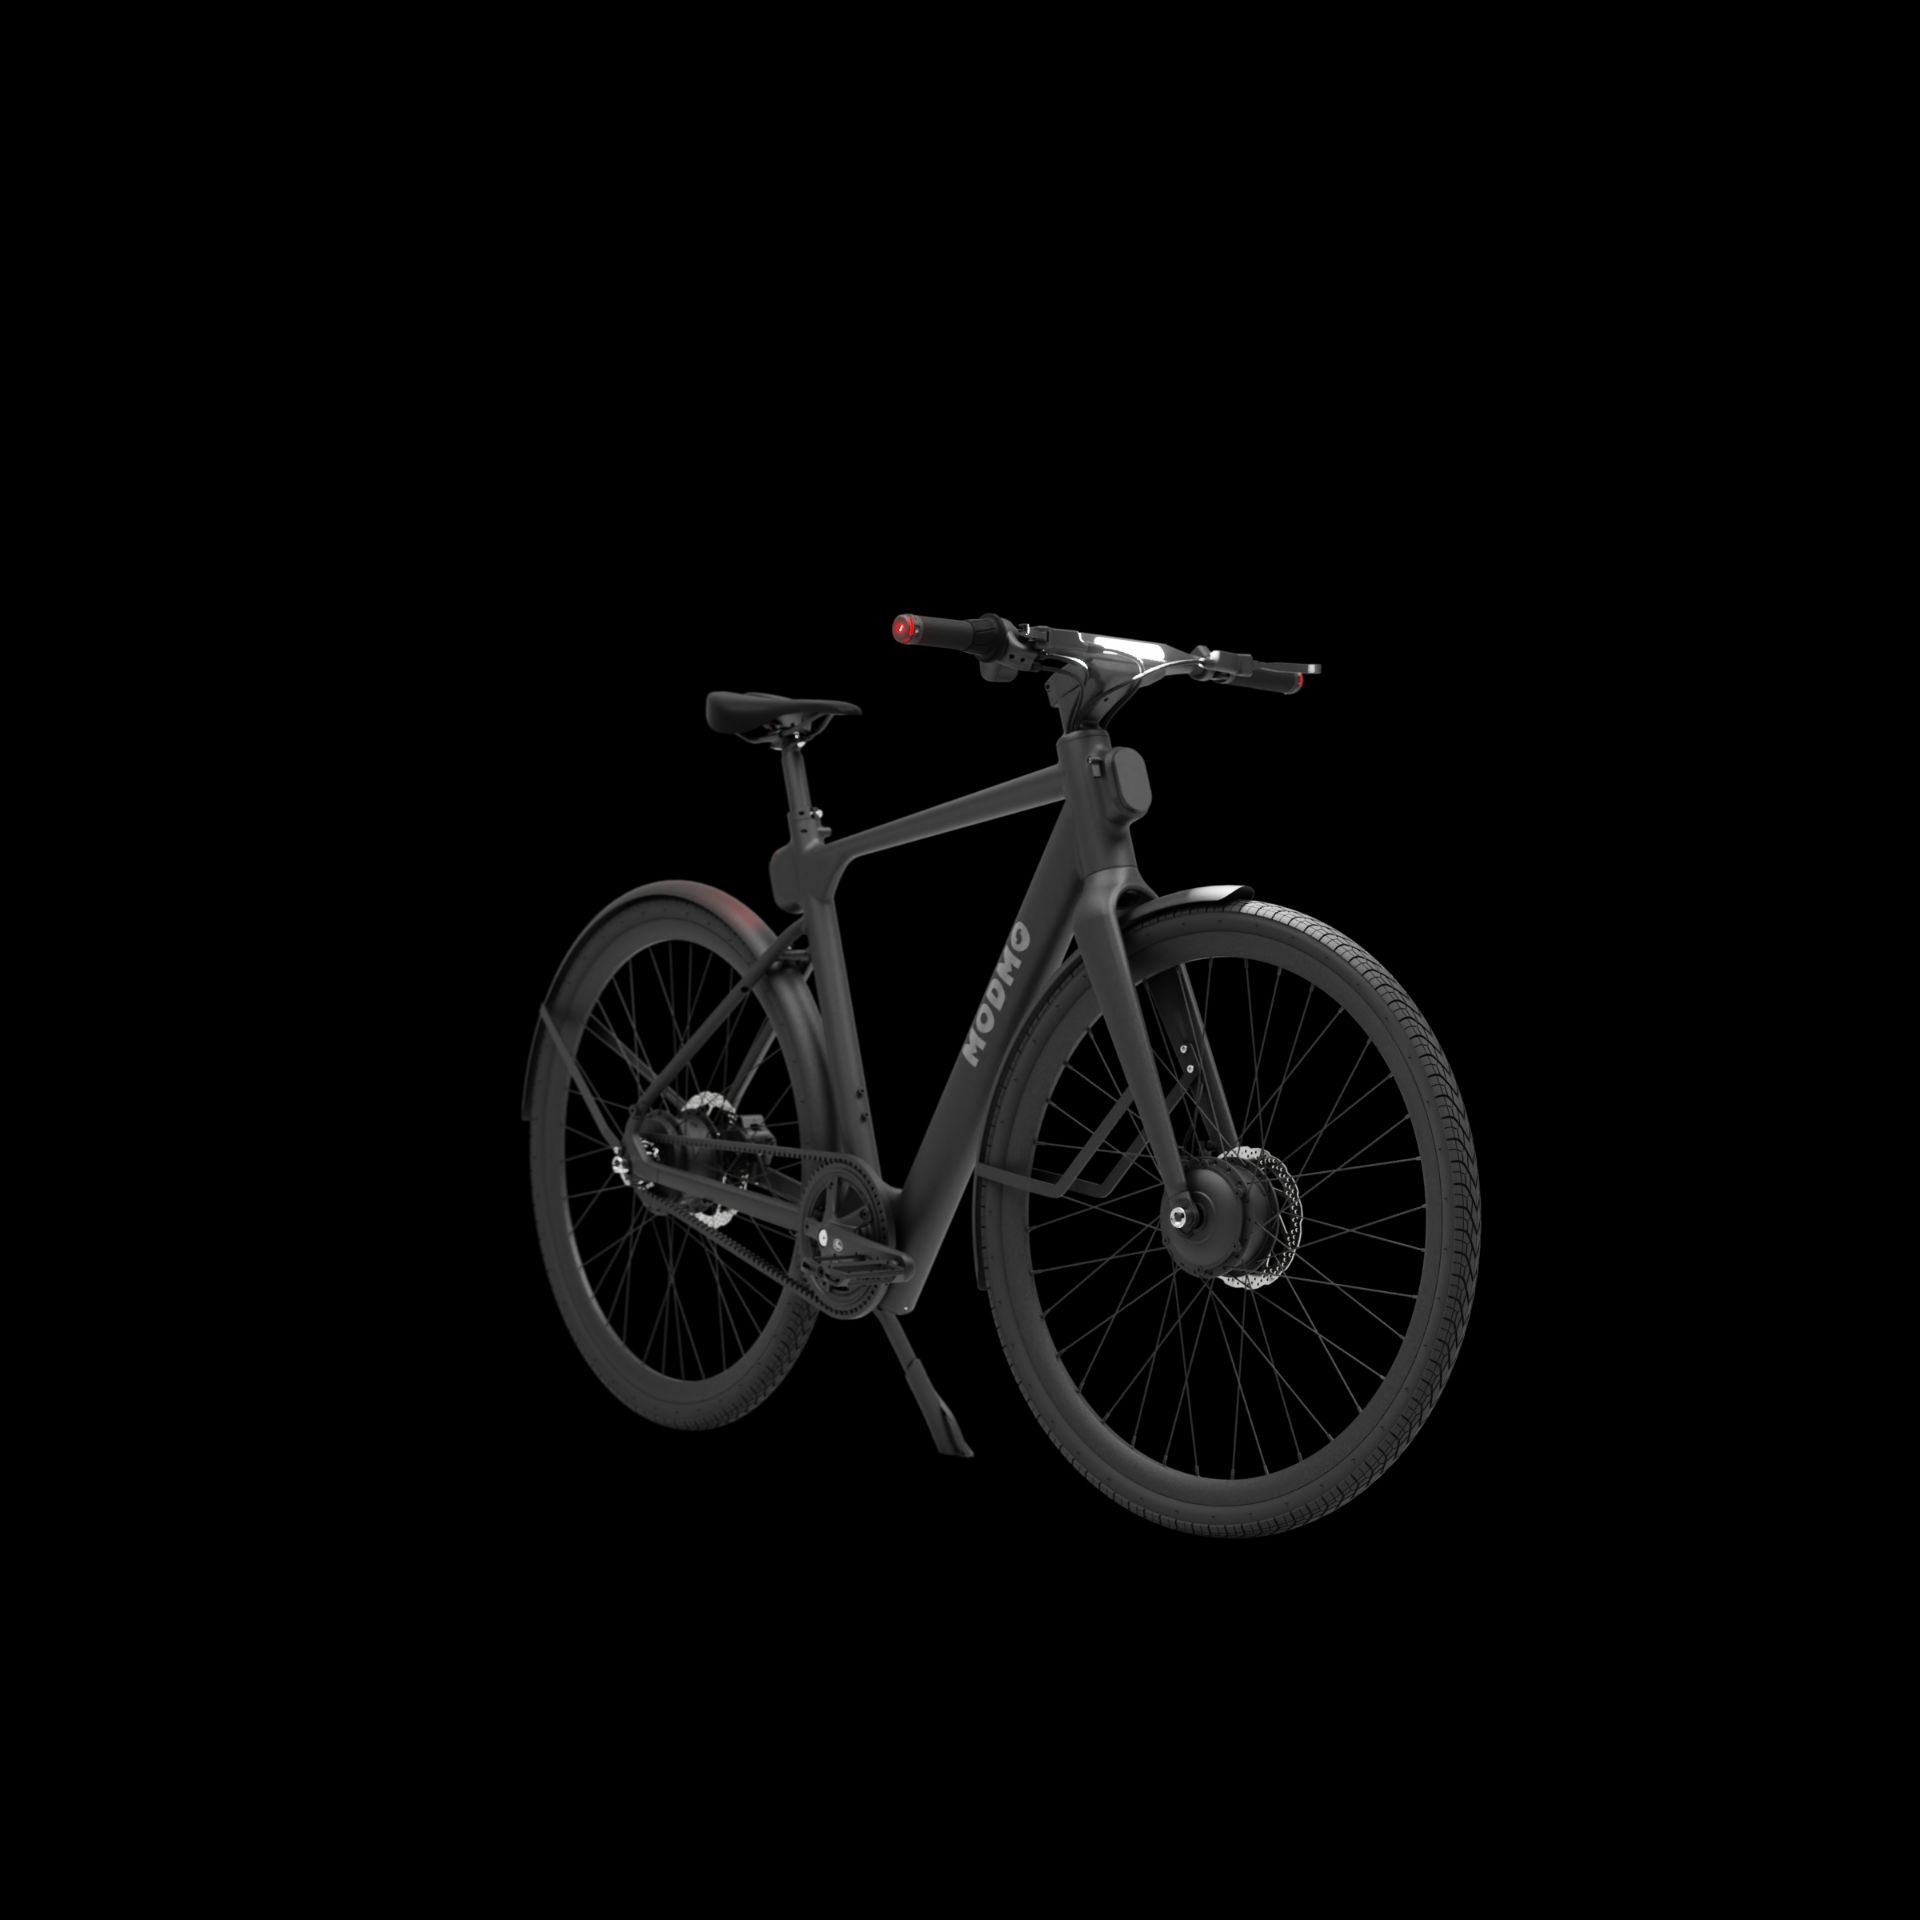 Modmo Saigon+ Electric Bicycle - RRP £2800 - Size M (Rider: 155-175cm) - Image 9 of 15